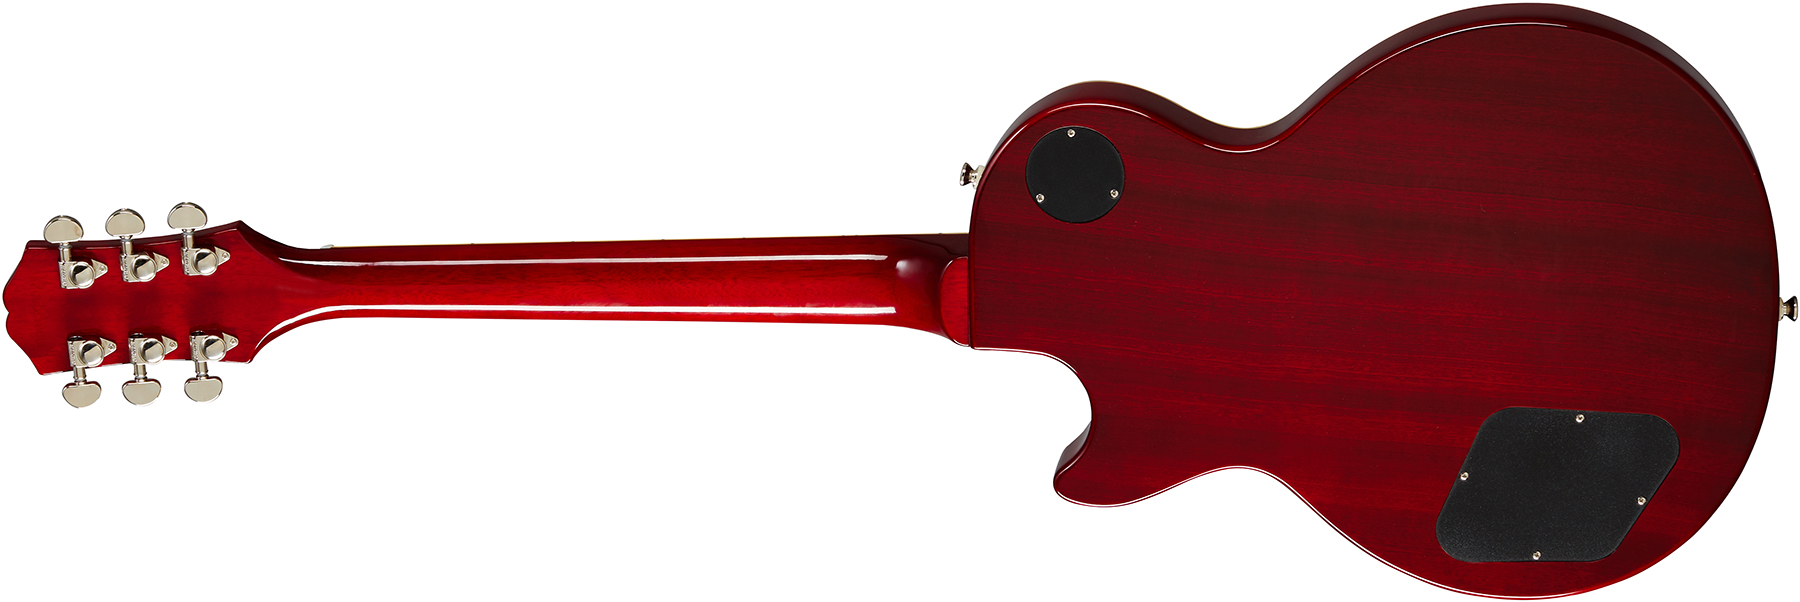 Epiphone Les Paul Standard 60s Gaucher 2h Ht Rw - Iced Tea - Linkshandige elektrische gitaar - Variation 1